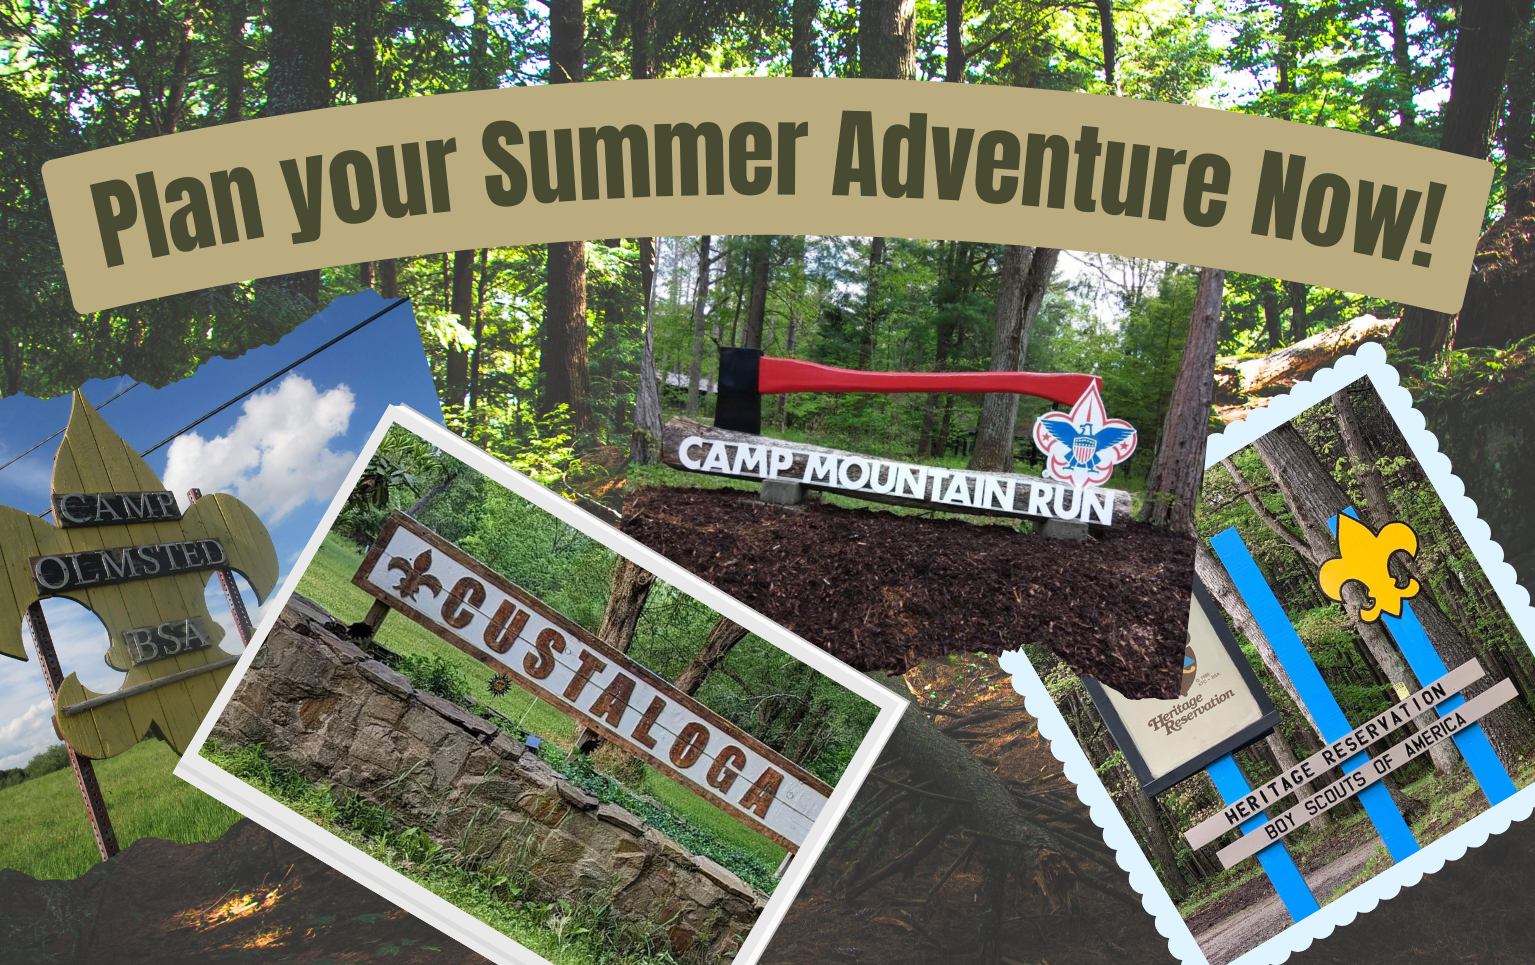 Plan your Summer Adventure Now!